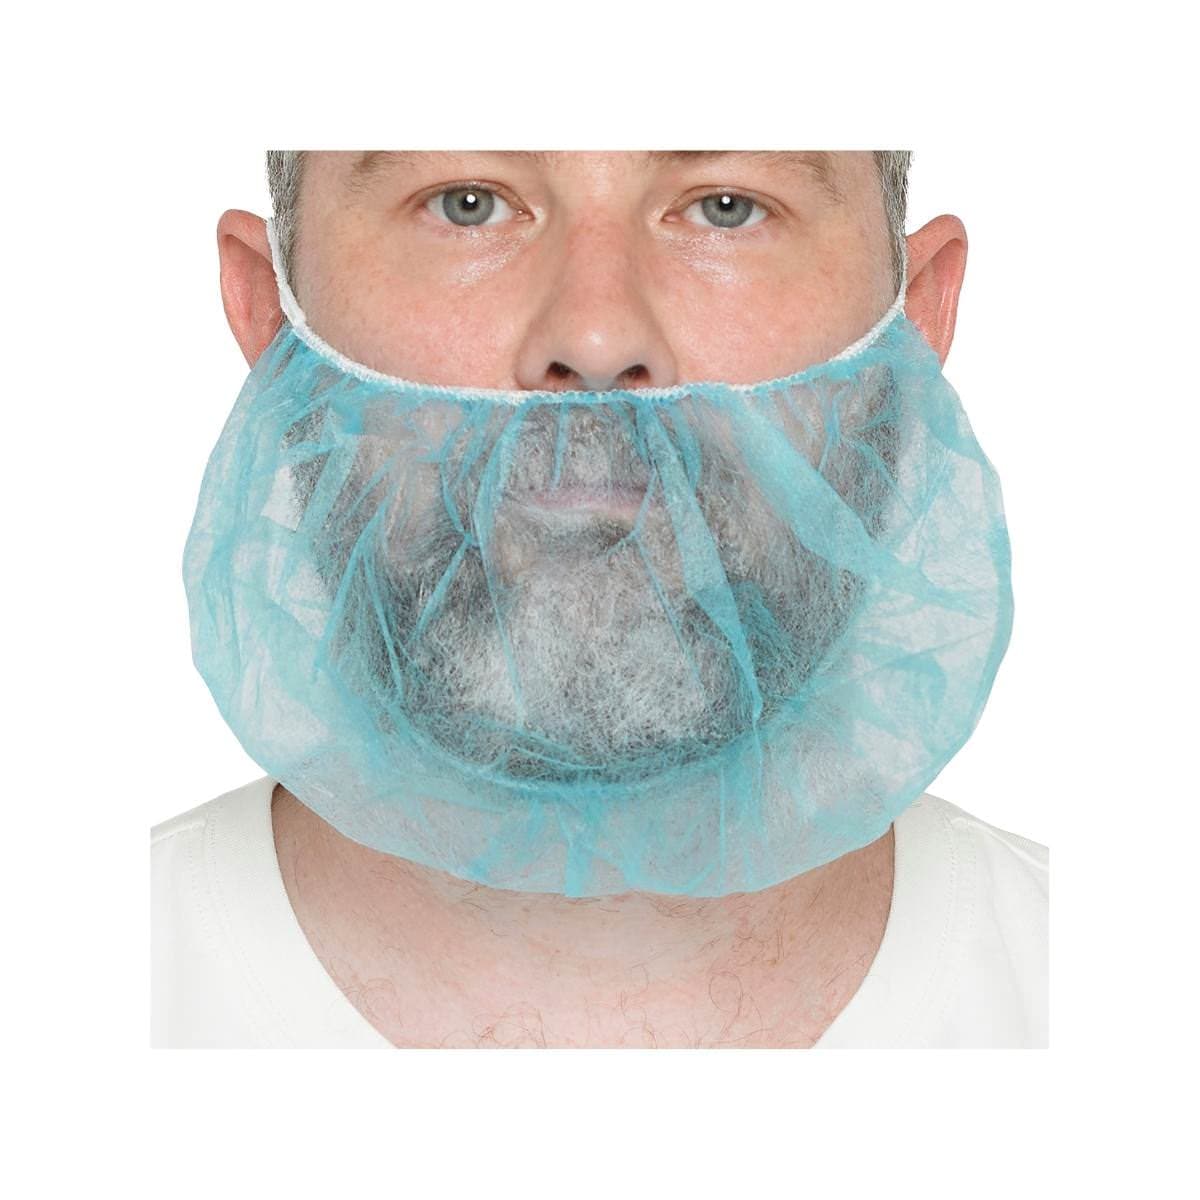 SafeRite® Disposable Beard Covers SRDBC (Carton of 1000)